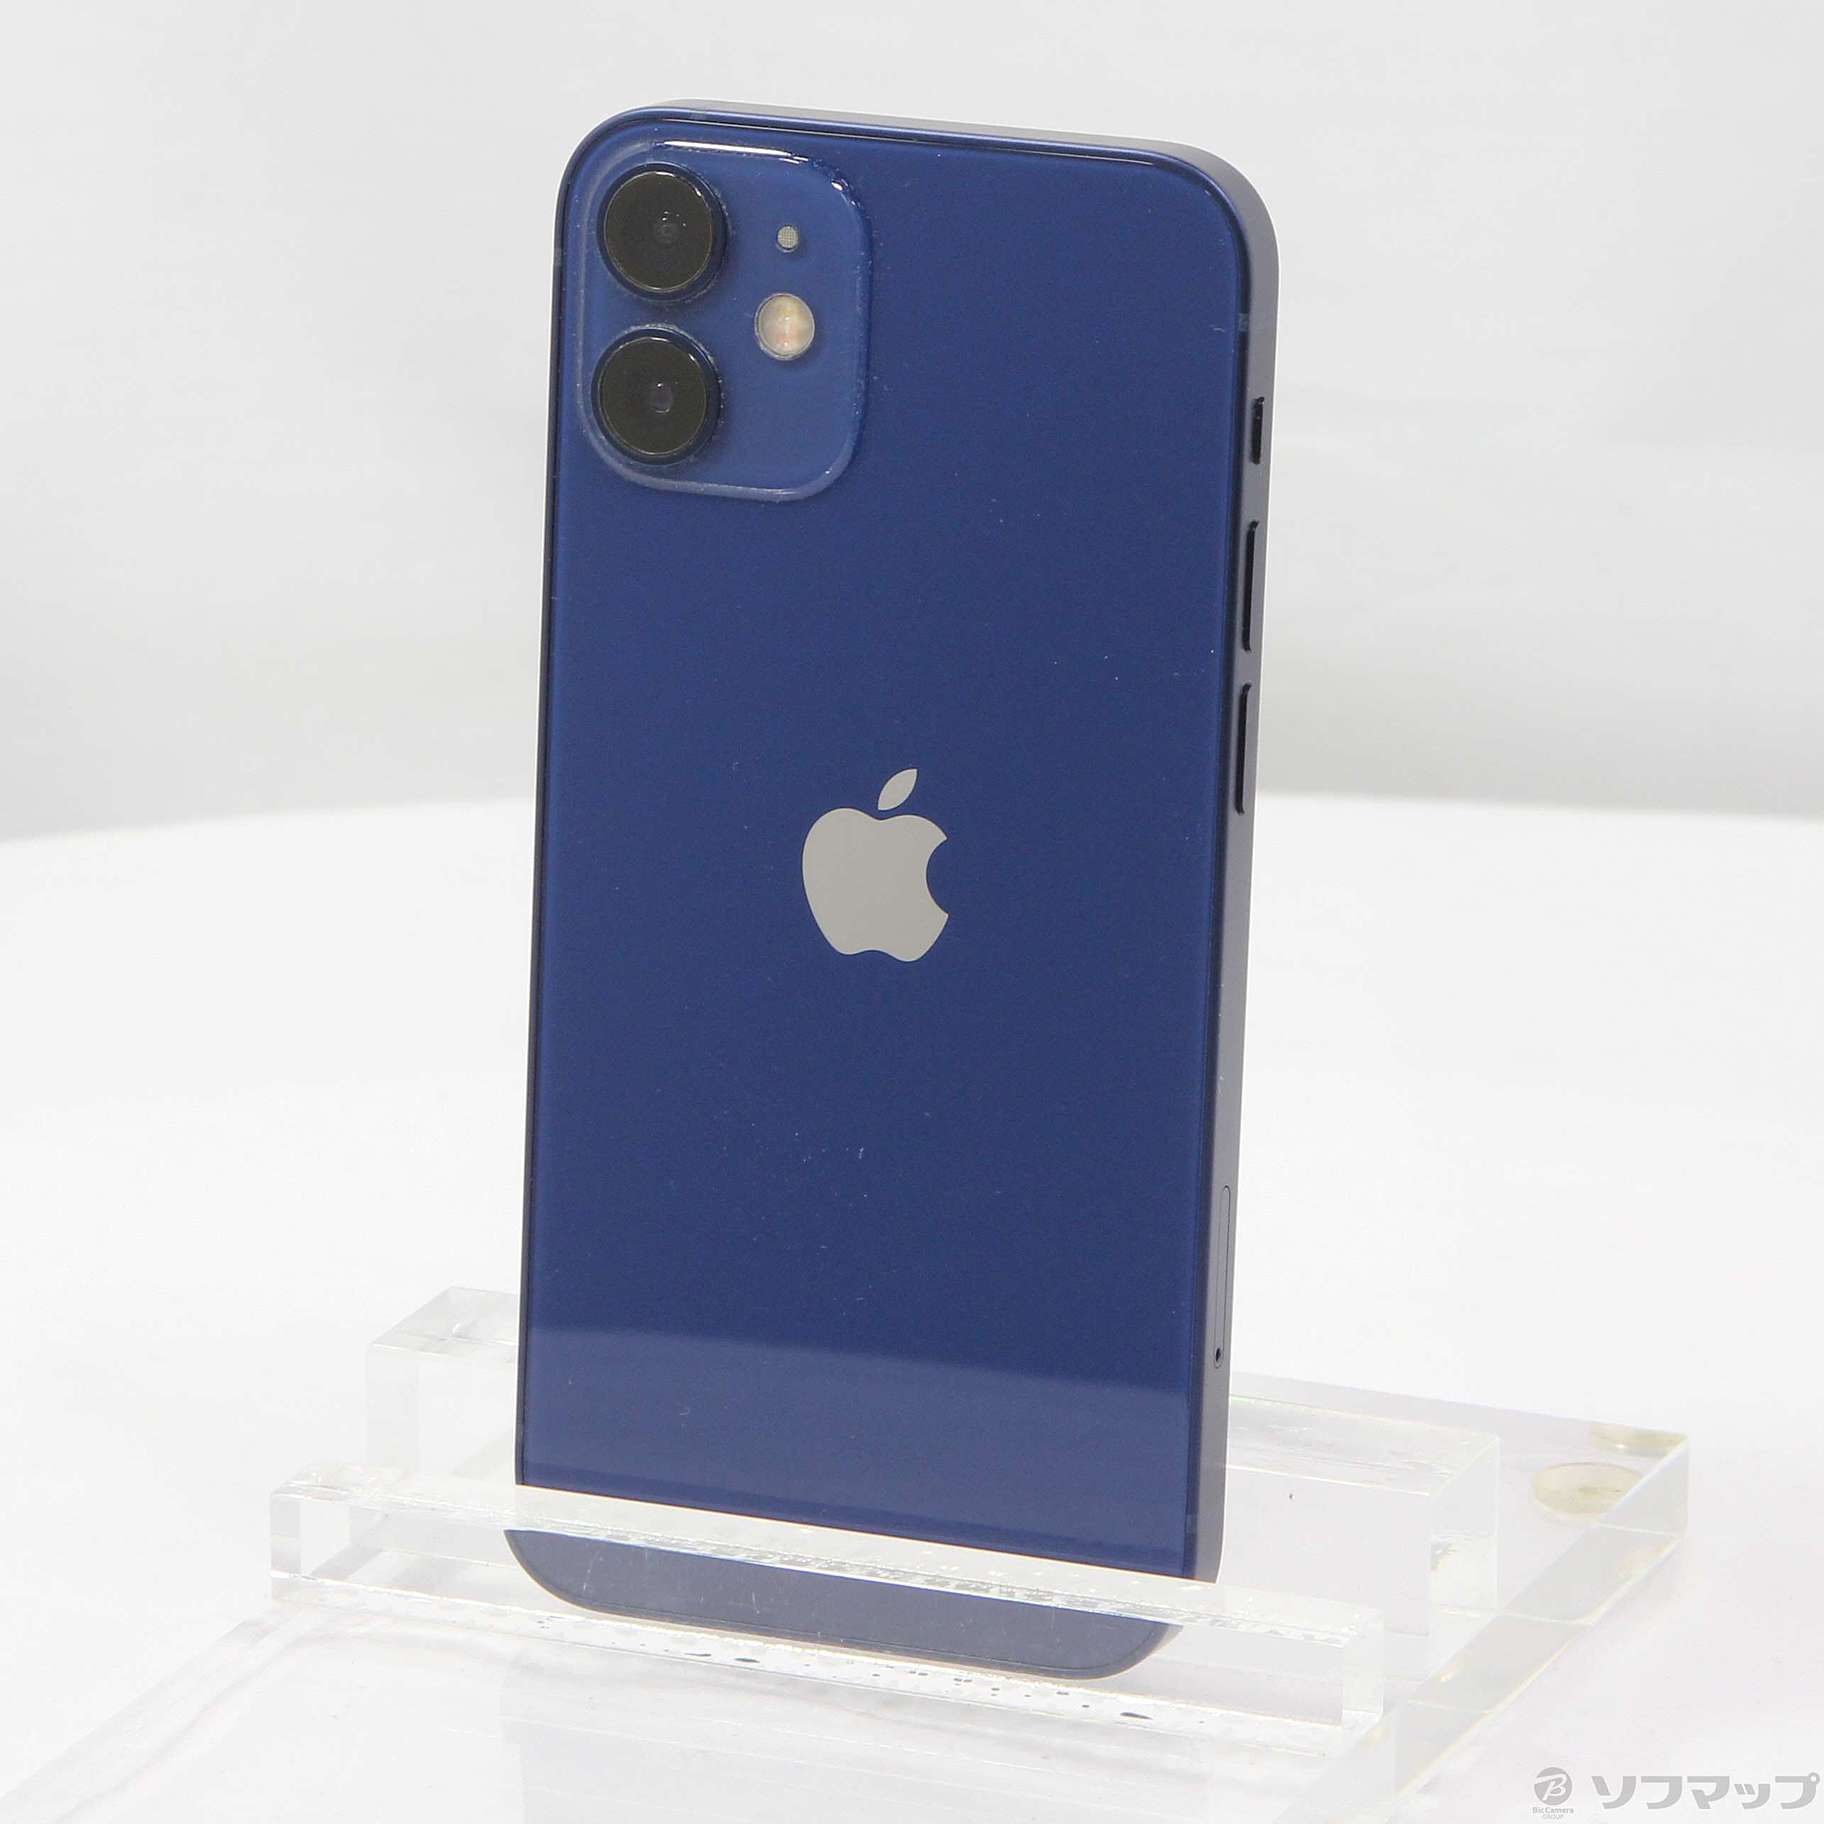 iPhone 12 mini 128GB SIMフリー [ブルー] 中古(白ロム)価格比較